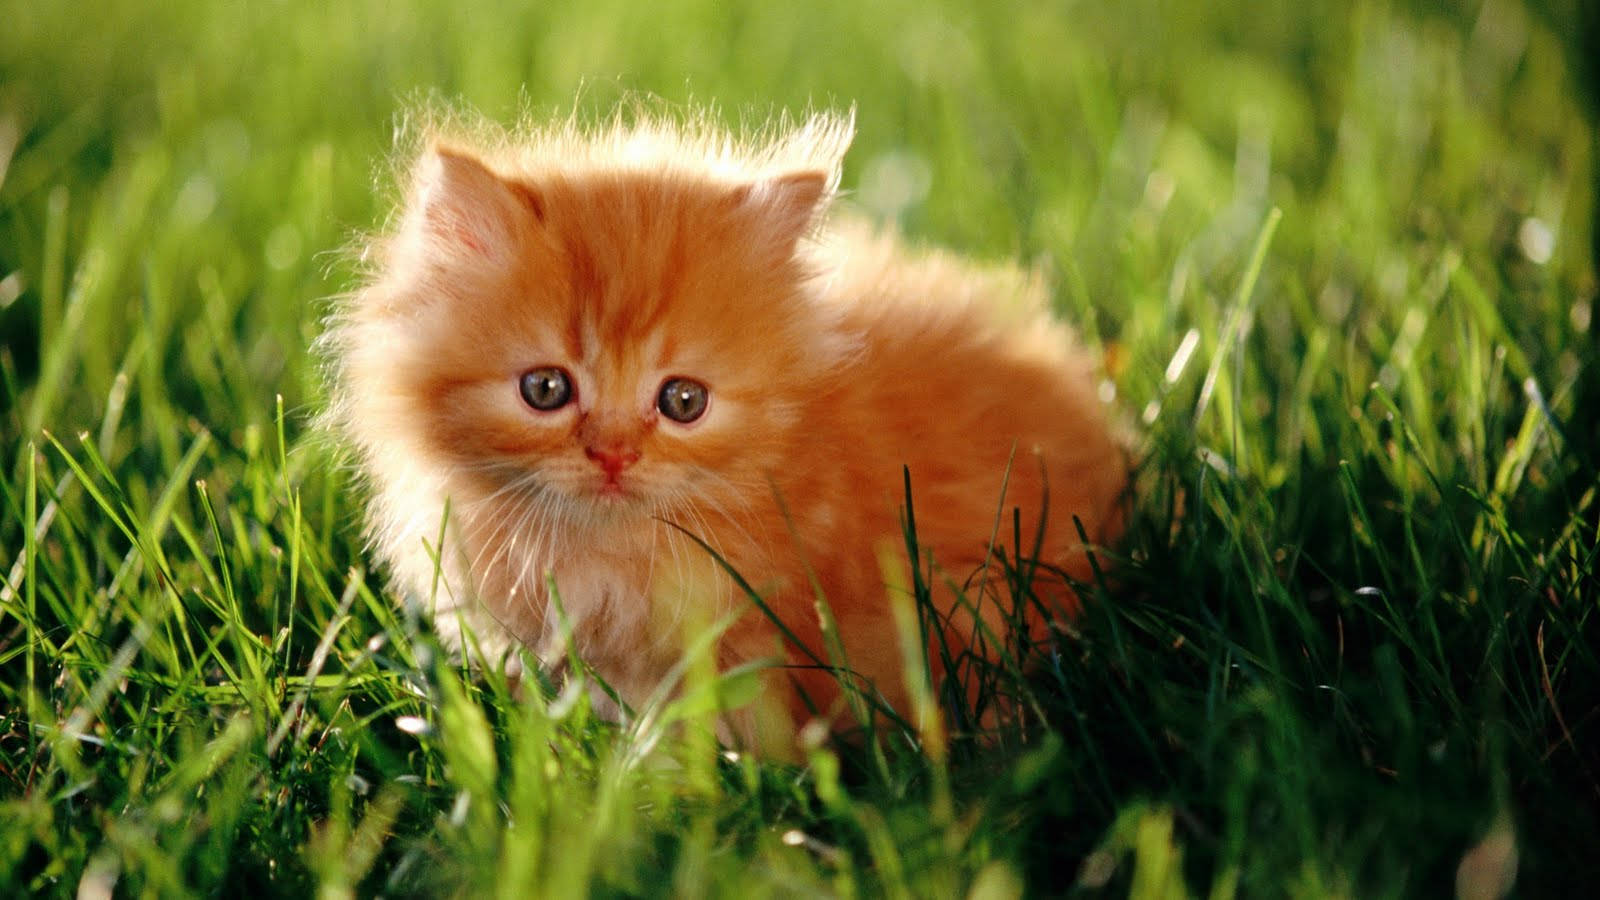 Beautiful Cat In Grass Field Wallpaper